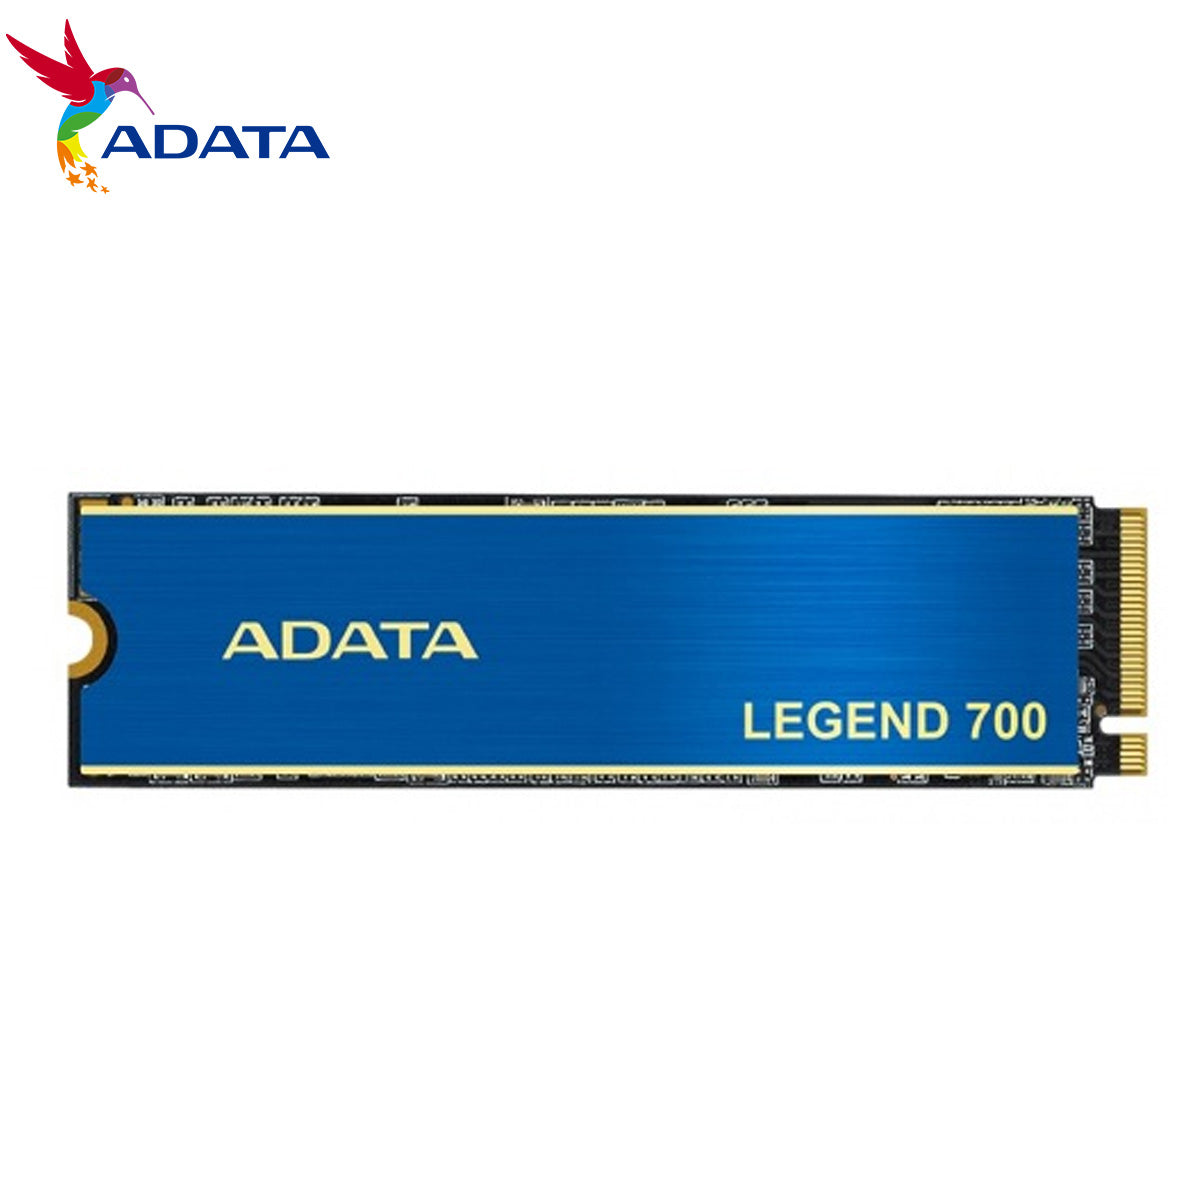 ADATA ALEG-700-512GCS Legend 700 512GB M.2 PCIe 3.0 x4